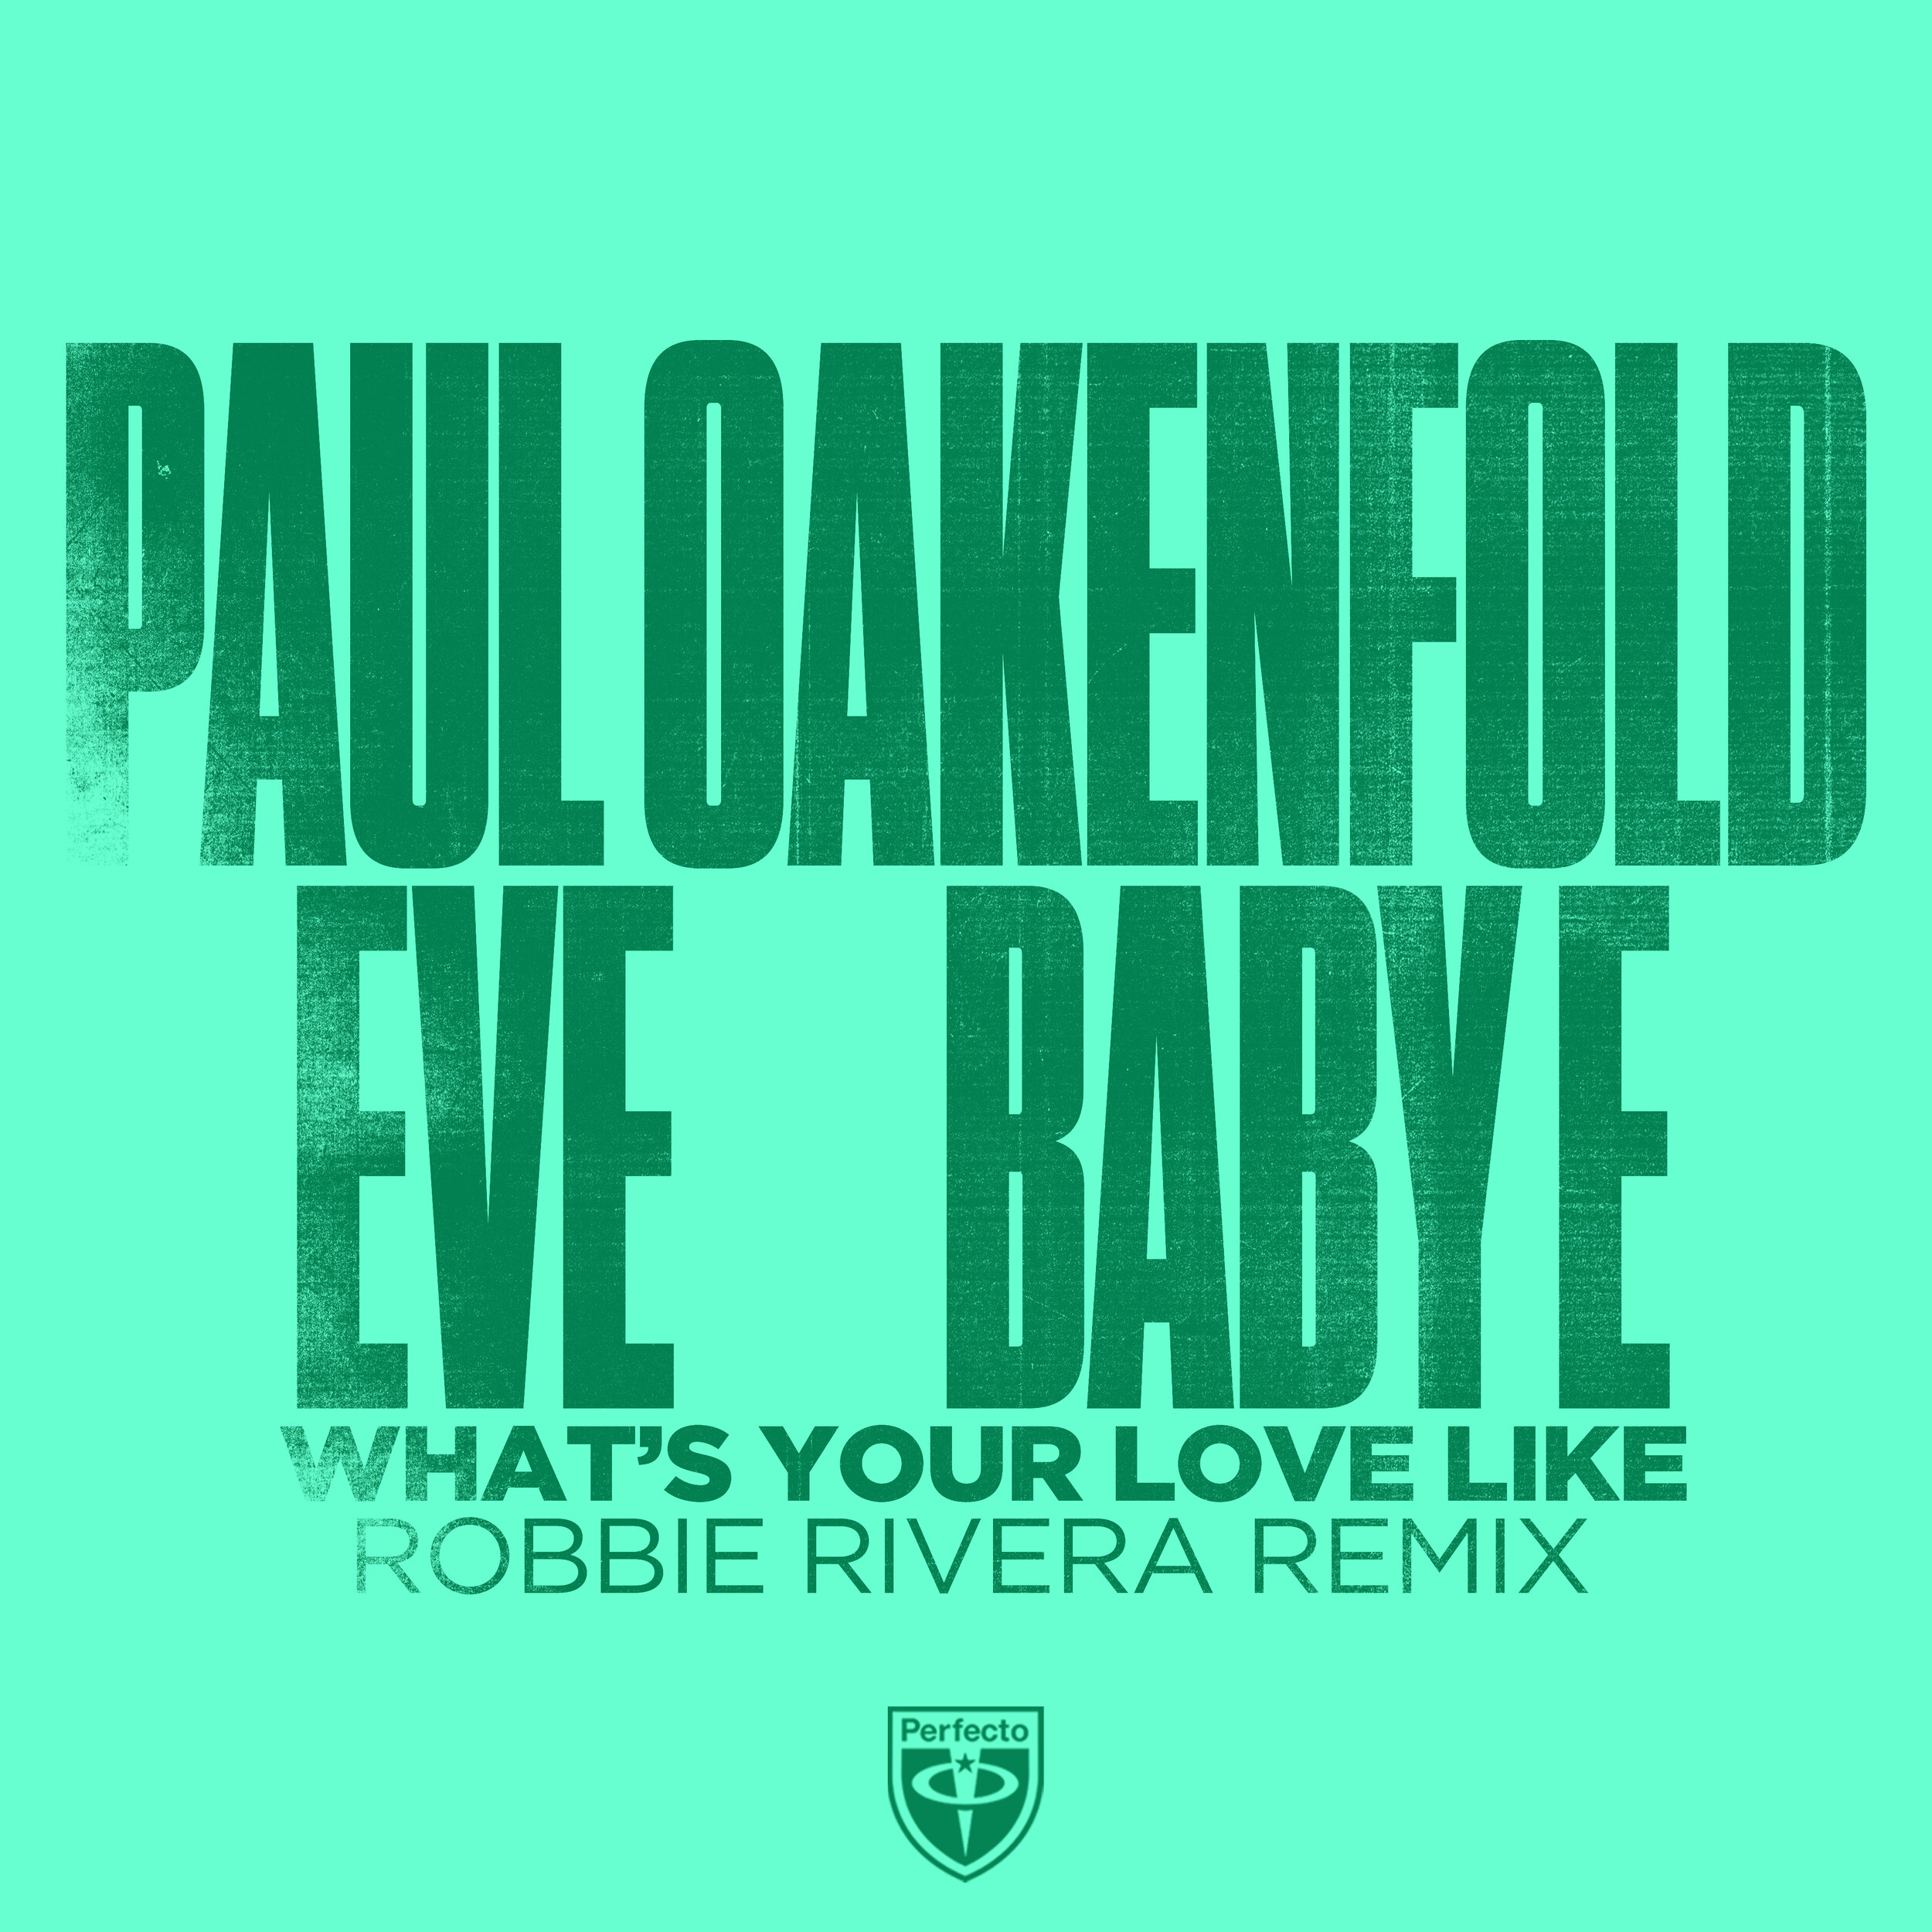 What's Your Love Like (Robbie Rivera Remix) - Paul Oakenfold x Eve x Baby E - Artwork.jpg